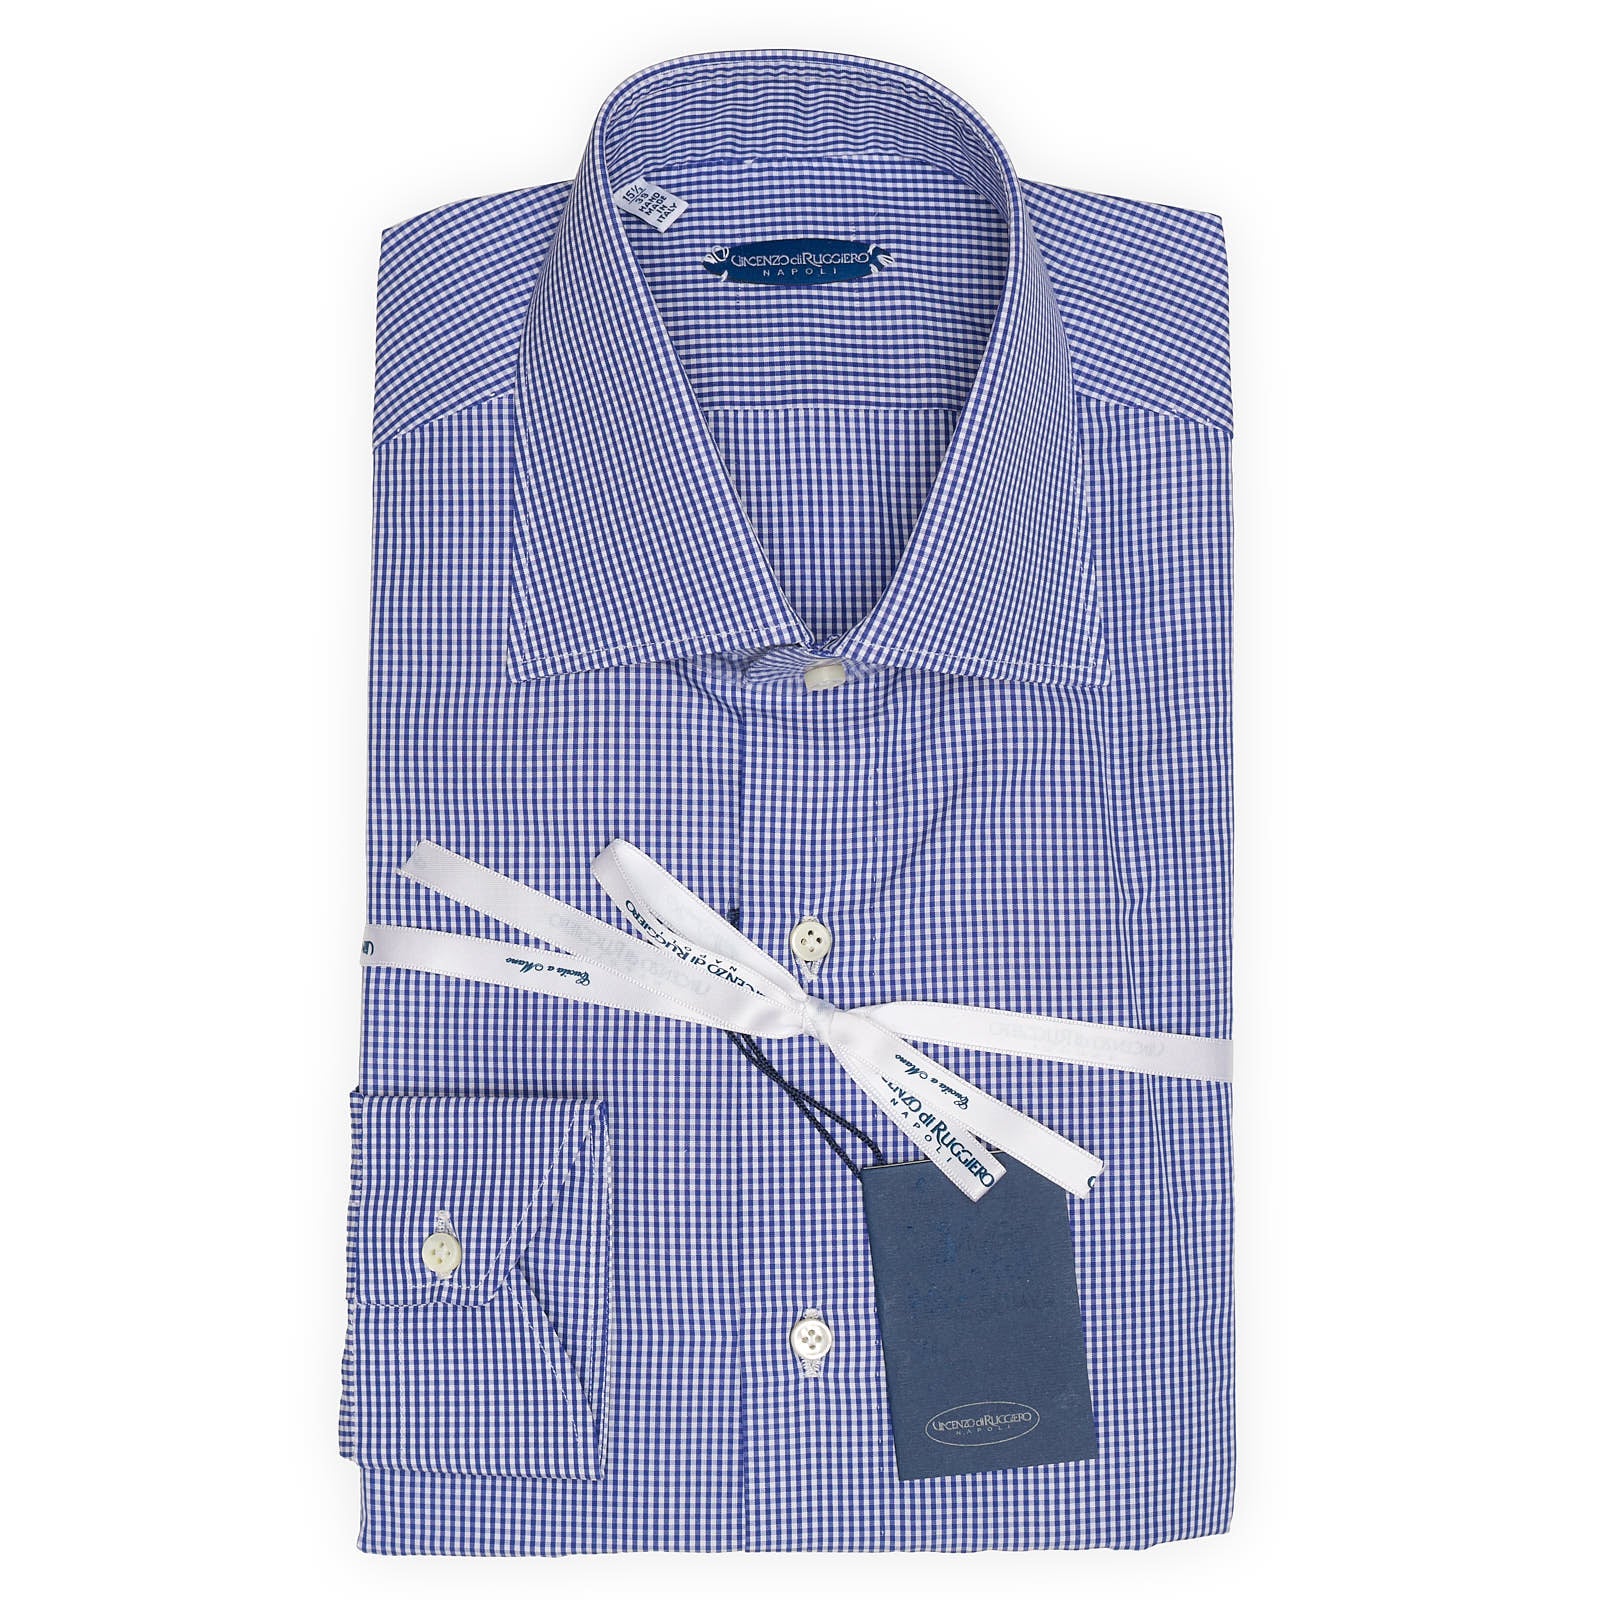 VINCENZO DI RUGGIERO Handmade Blue Check Cotton Dress Shirt EU 39 NEW US 15.5